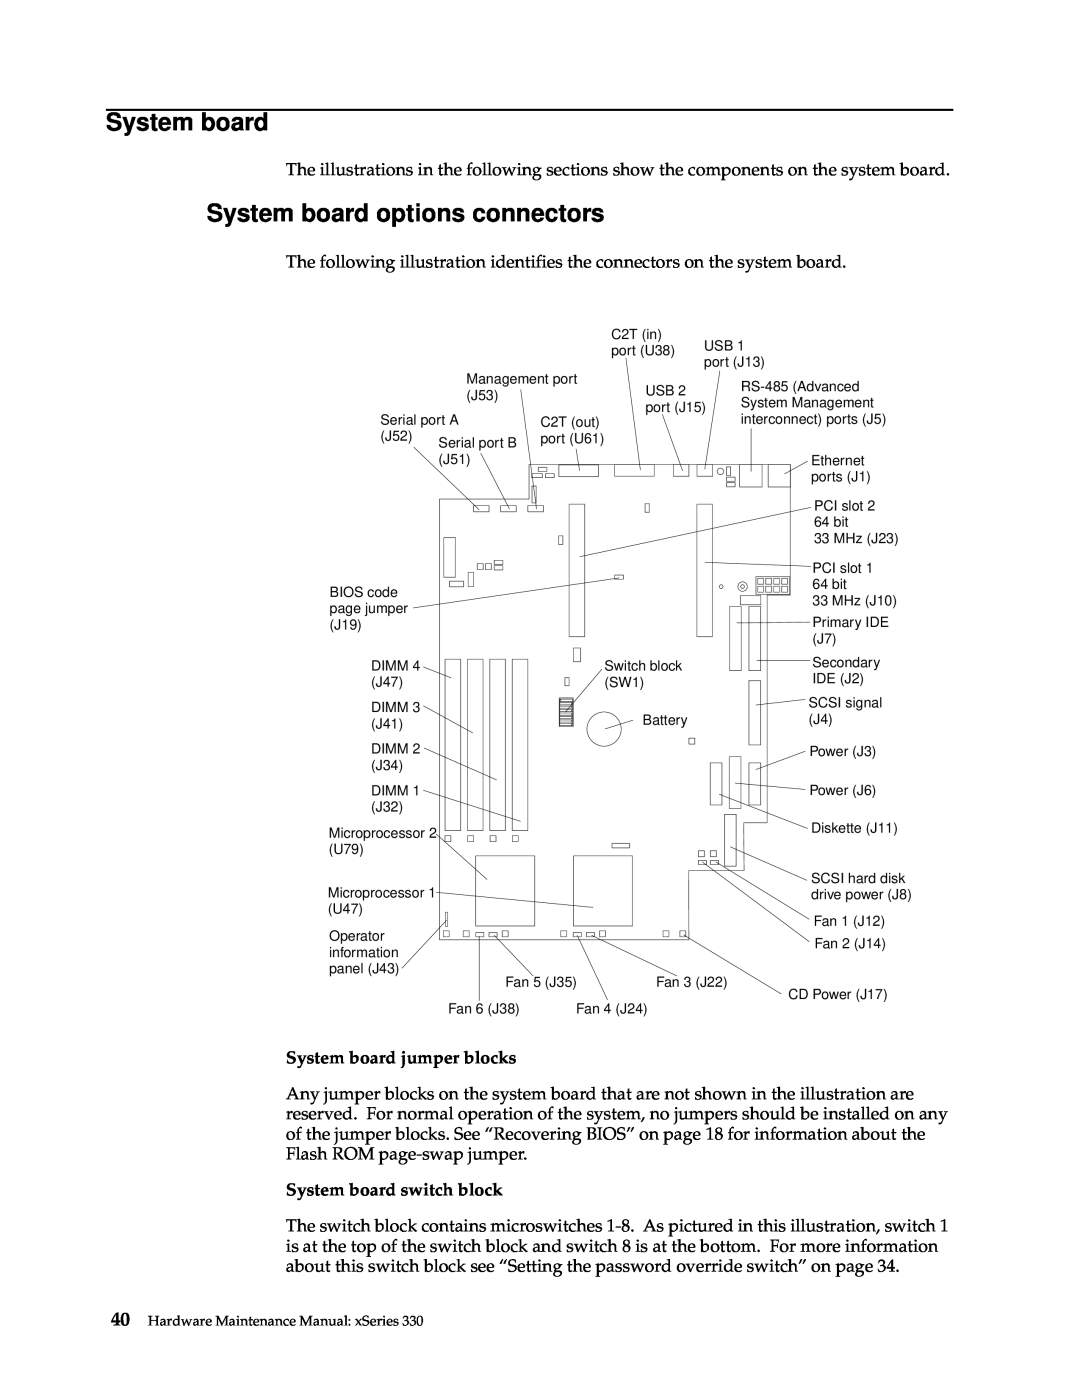 IBM xSeries 330 manual System board options connectors, System board jumper blocks, System board switch block 